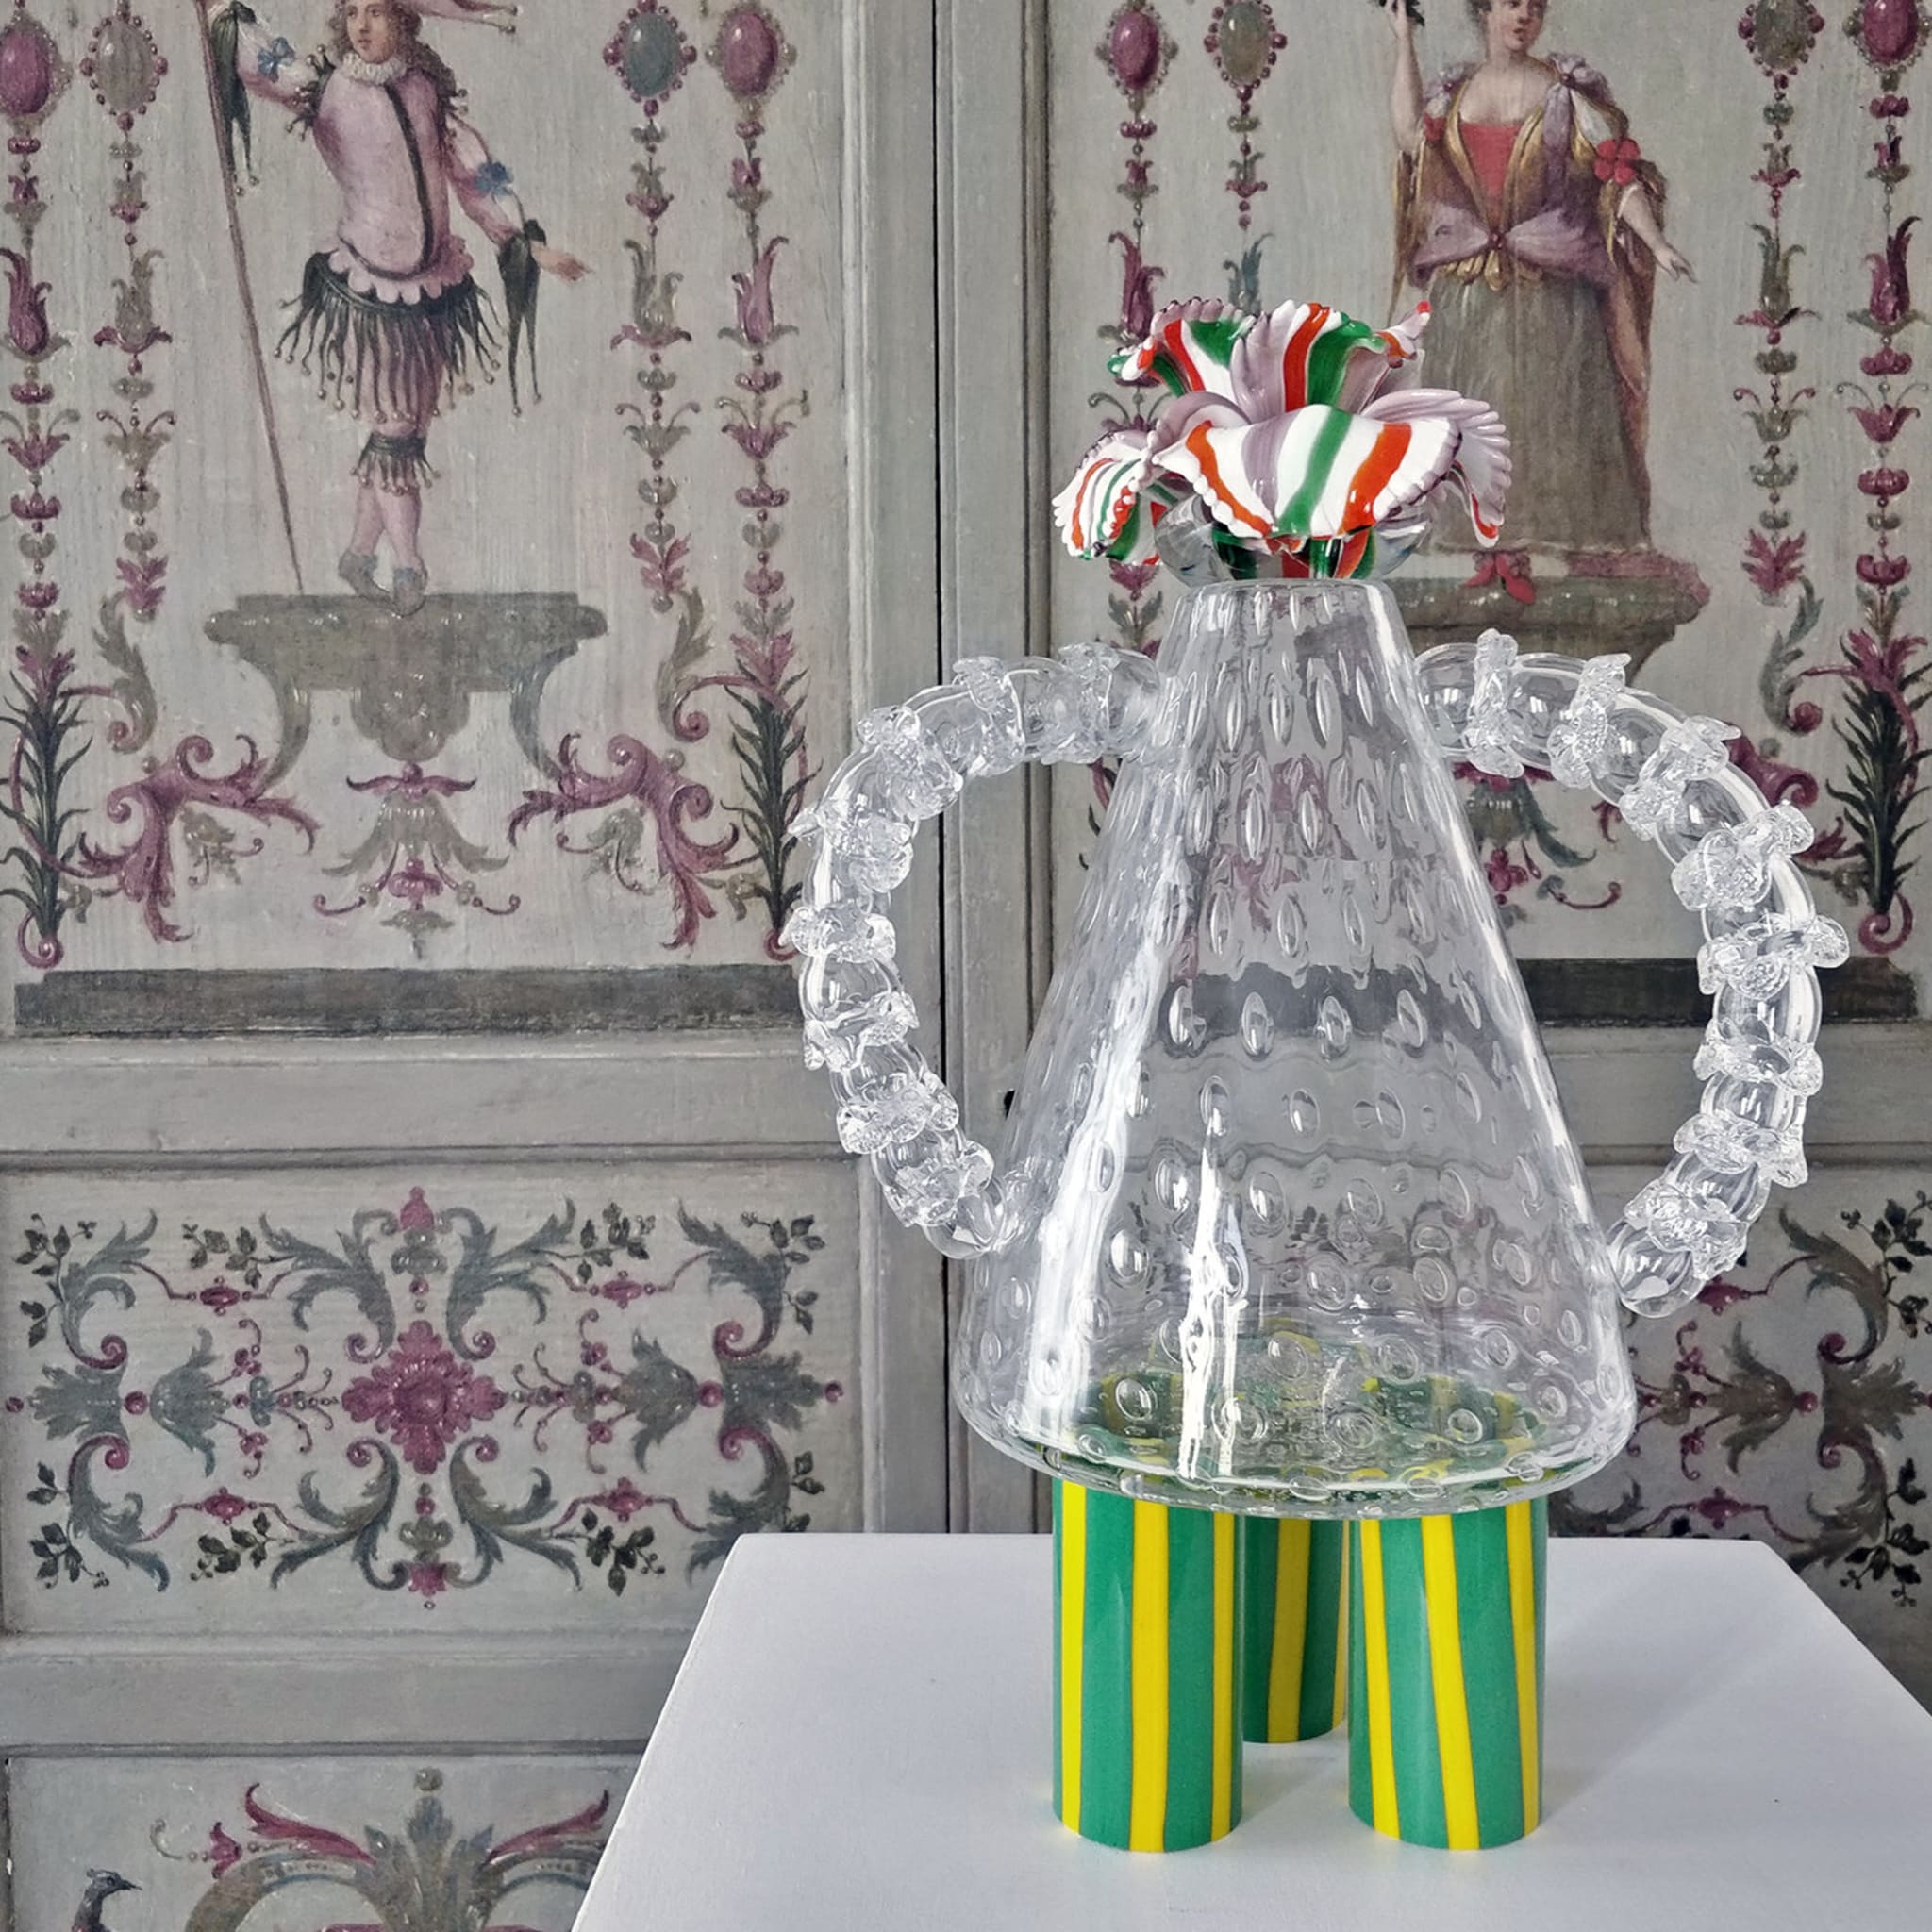 Rezzonica Venetian Glass Sculpture by Eliana Gerotto - Alternative view 4